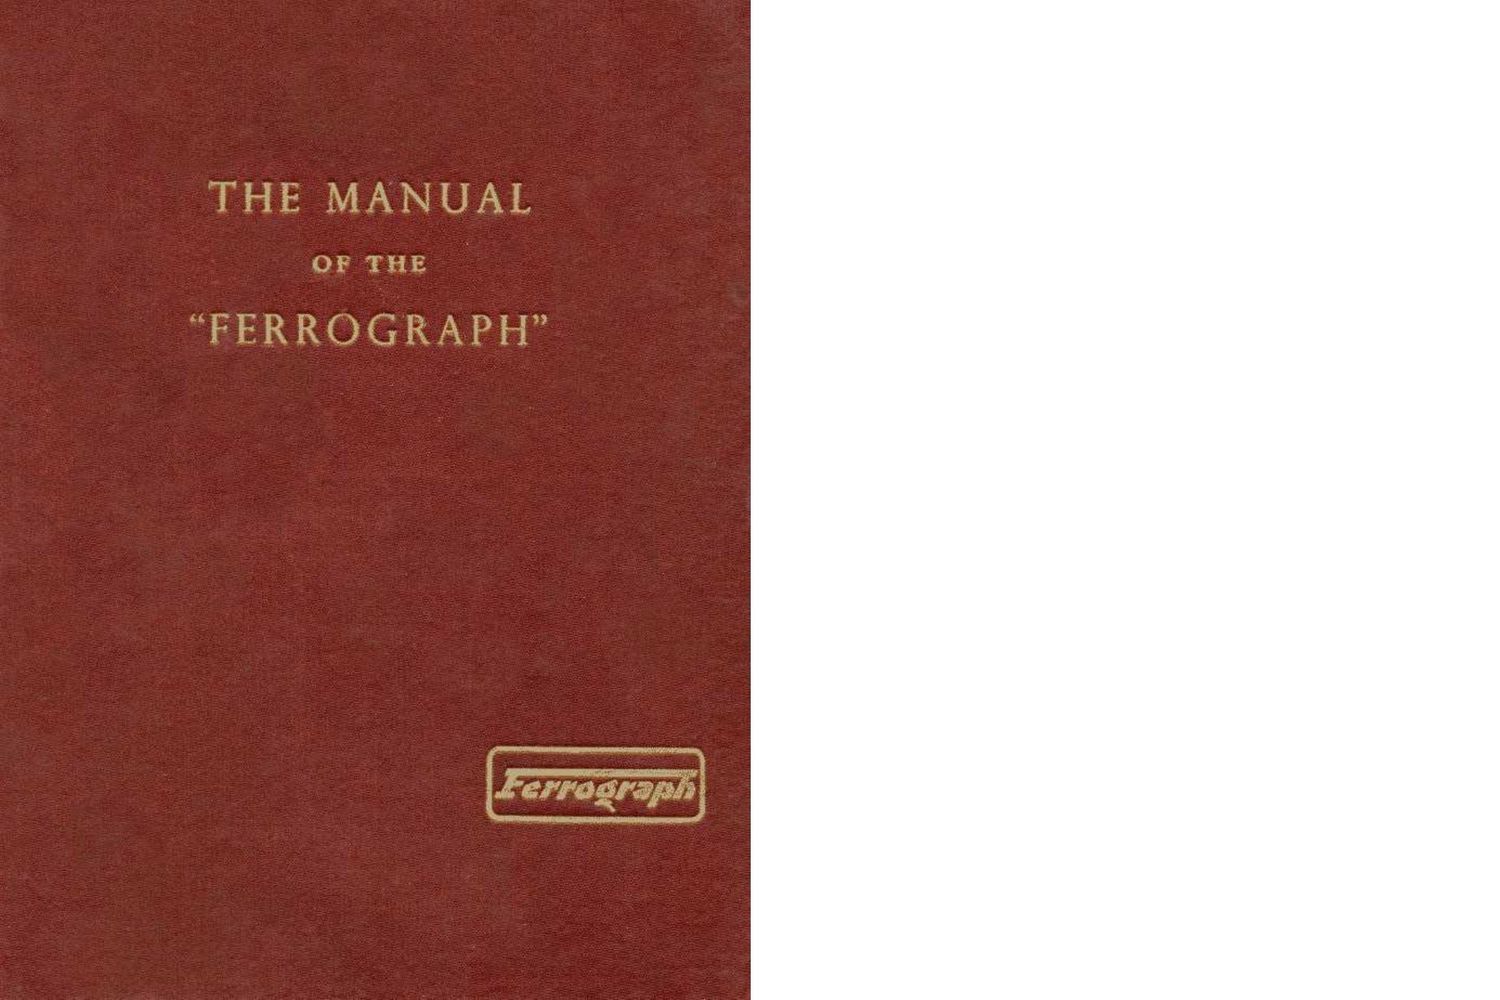 Ferrograph 2 A N Owners Manual